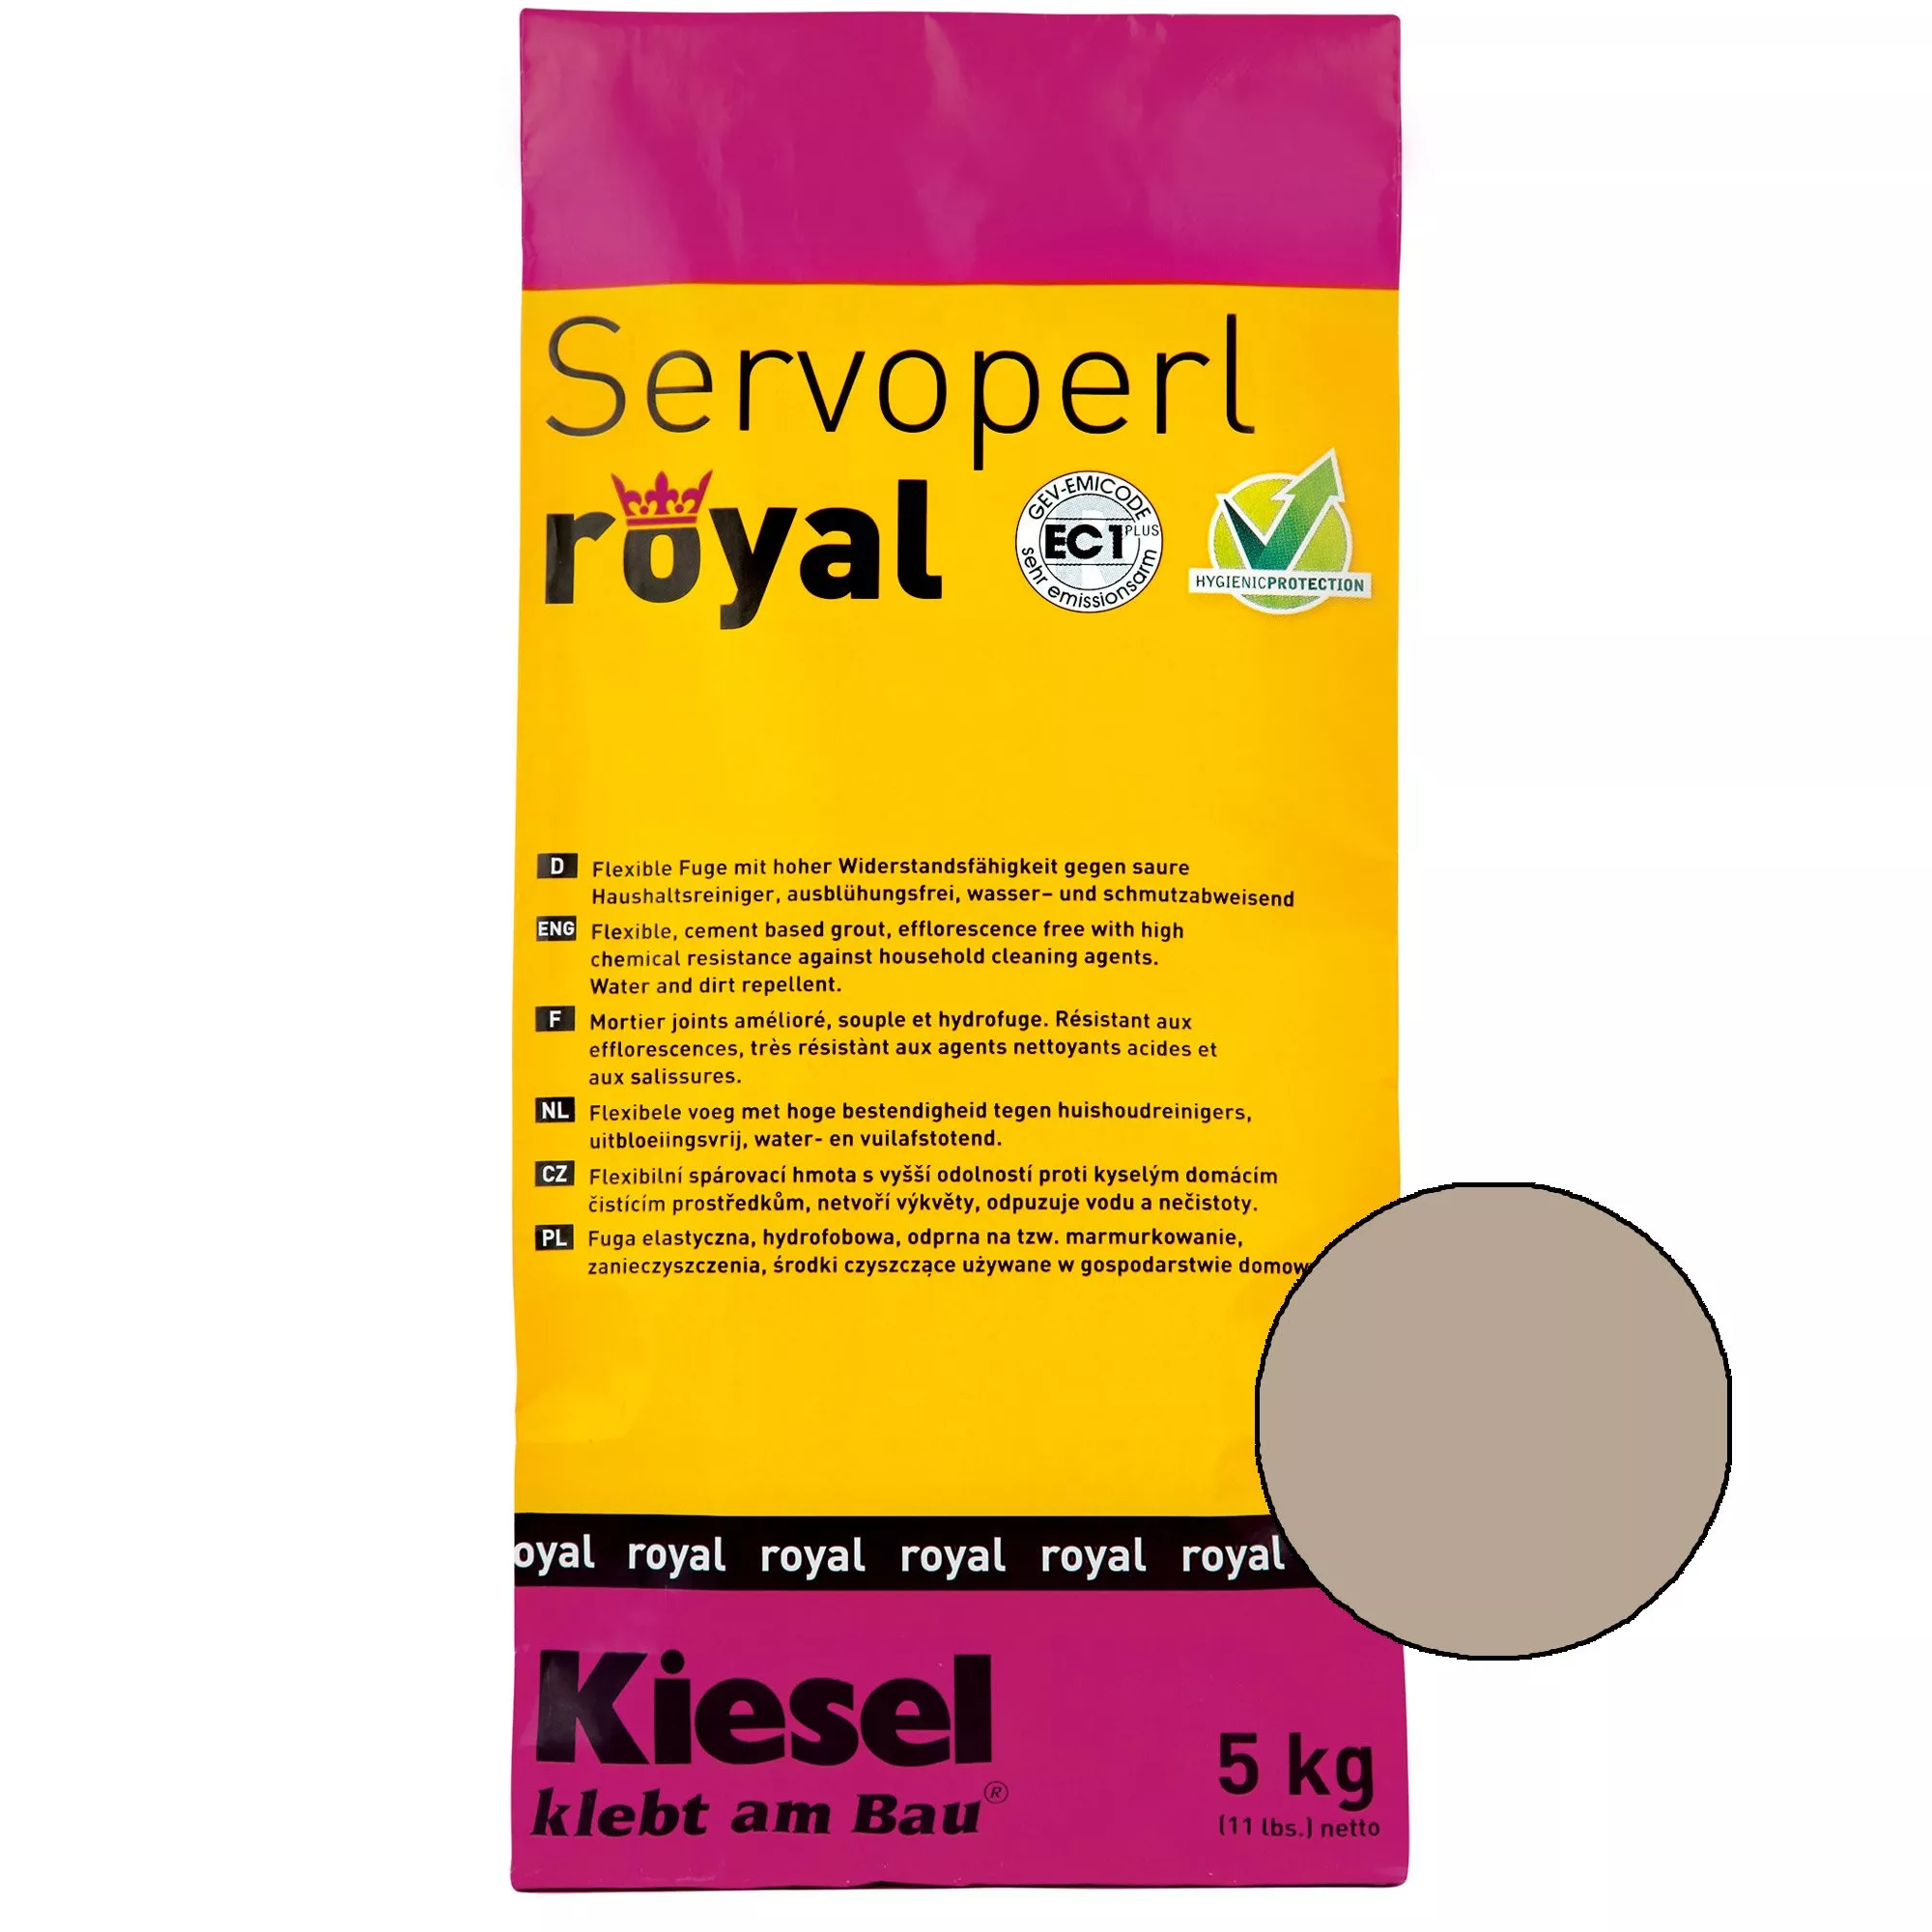 Kiesel Servoperl Royal - Elastyczna, Odporna Na Wodę I Brud Spoina (5KG Mochacino)